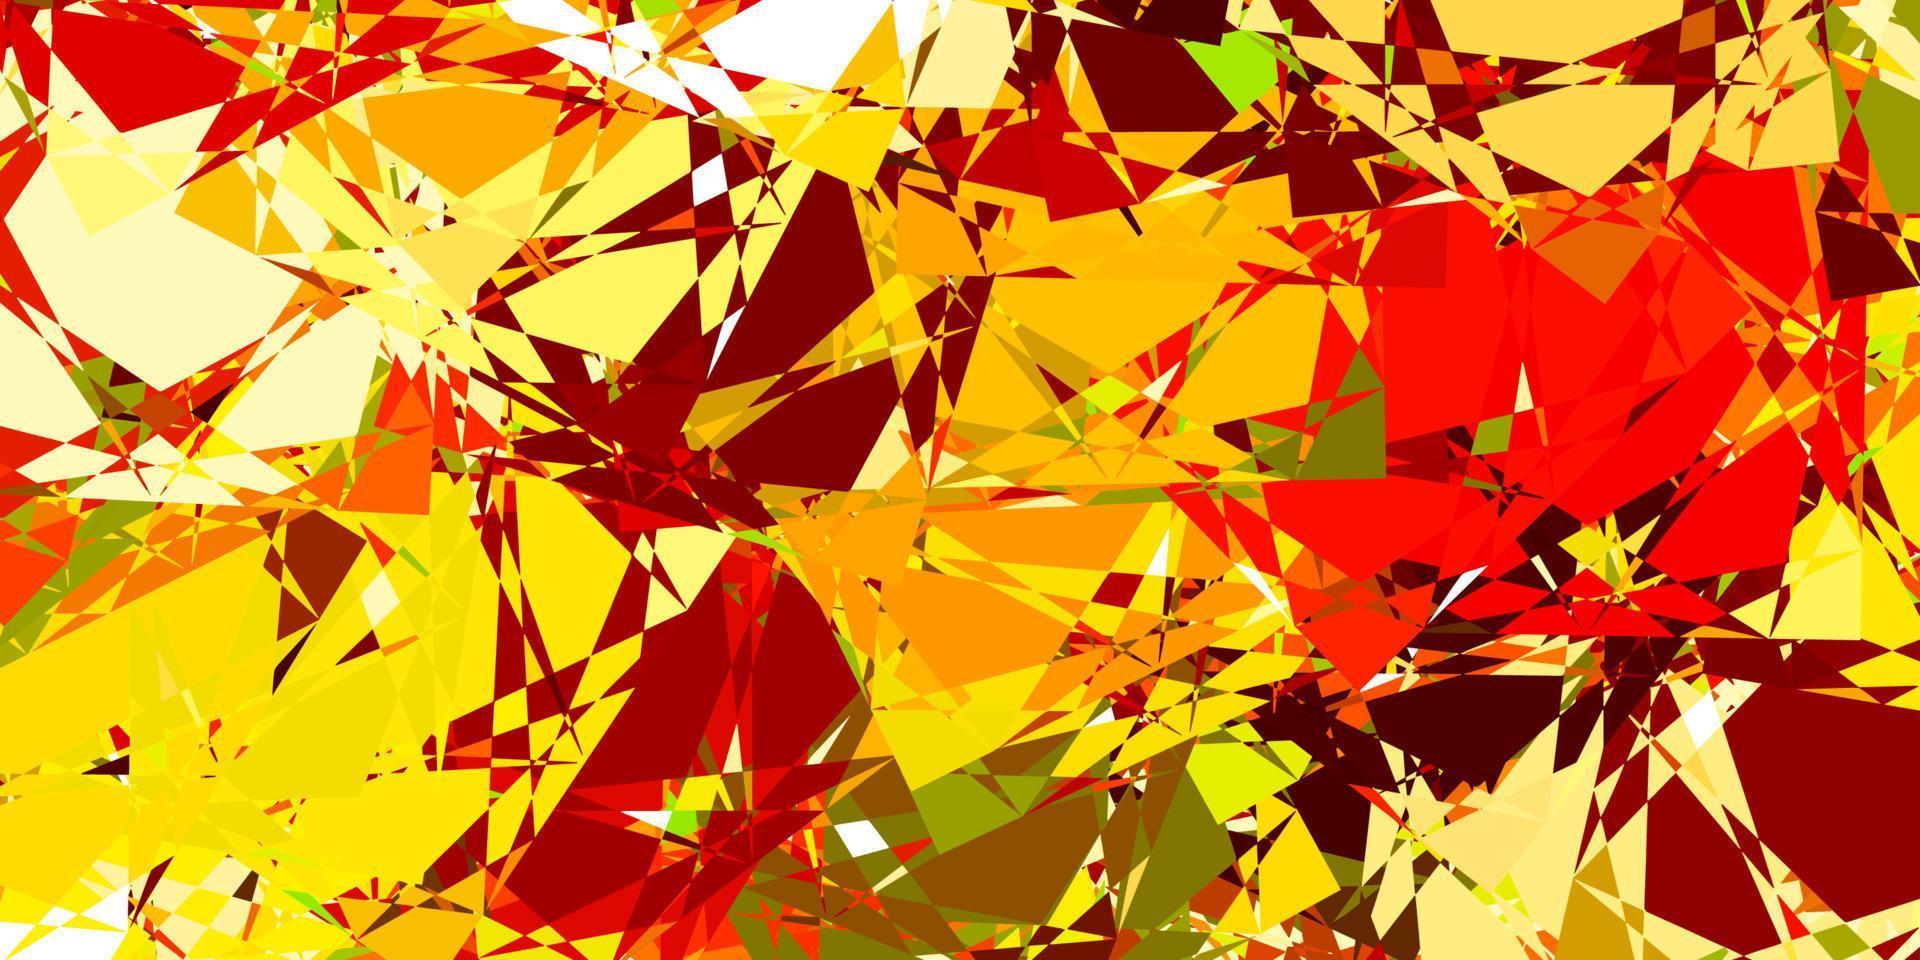 lichtgroene, rode vectorlay-out met driehoeksvormen. vector